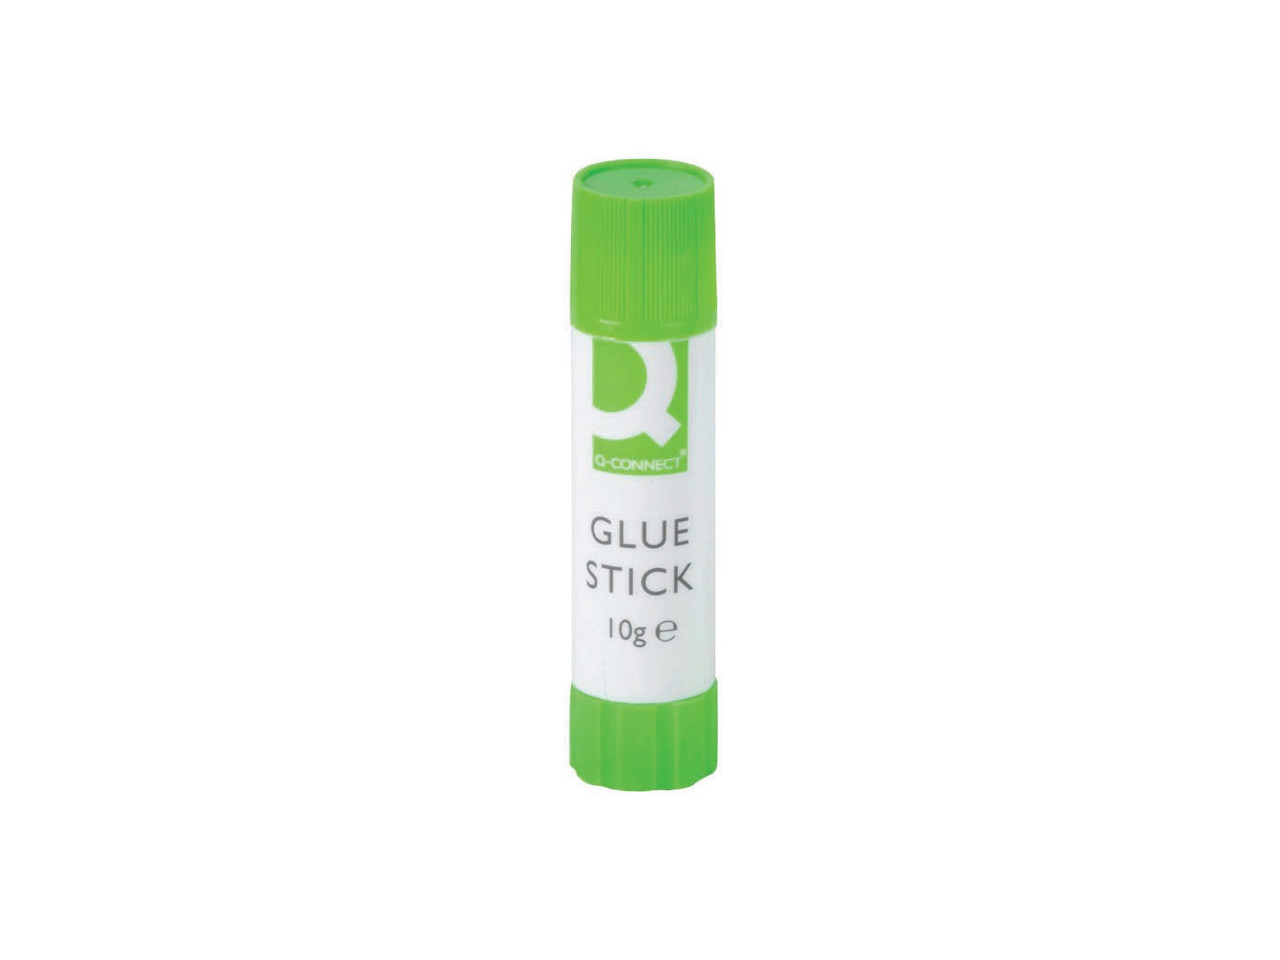 Q-Connect 10 Gram Glue stick RRP 59p CLEARANCE XL 49p